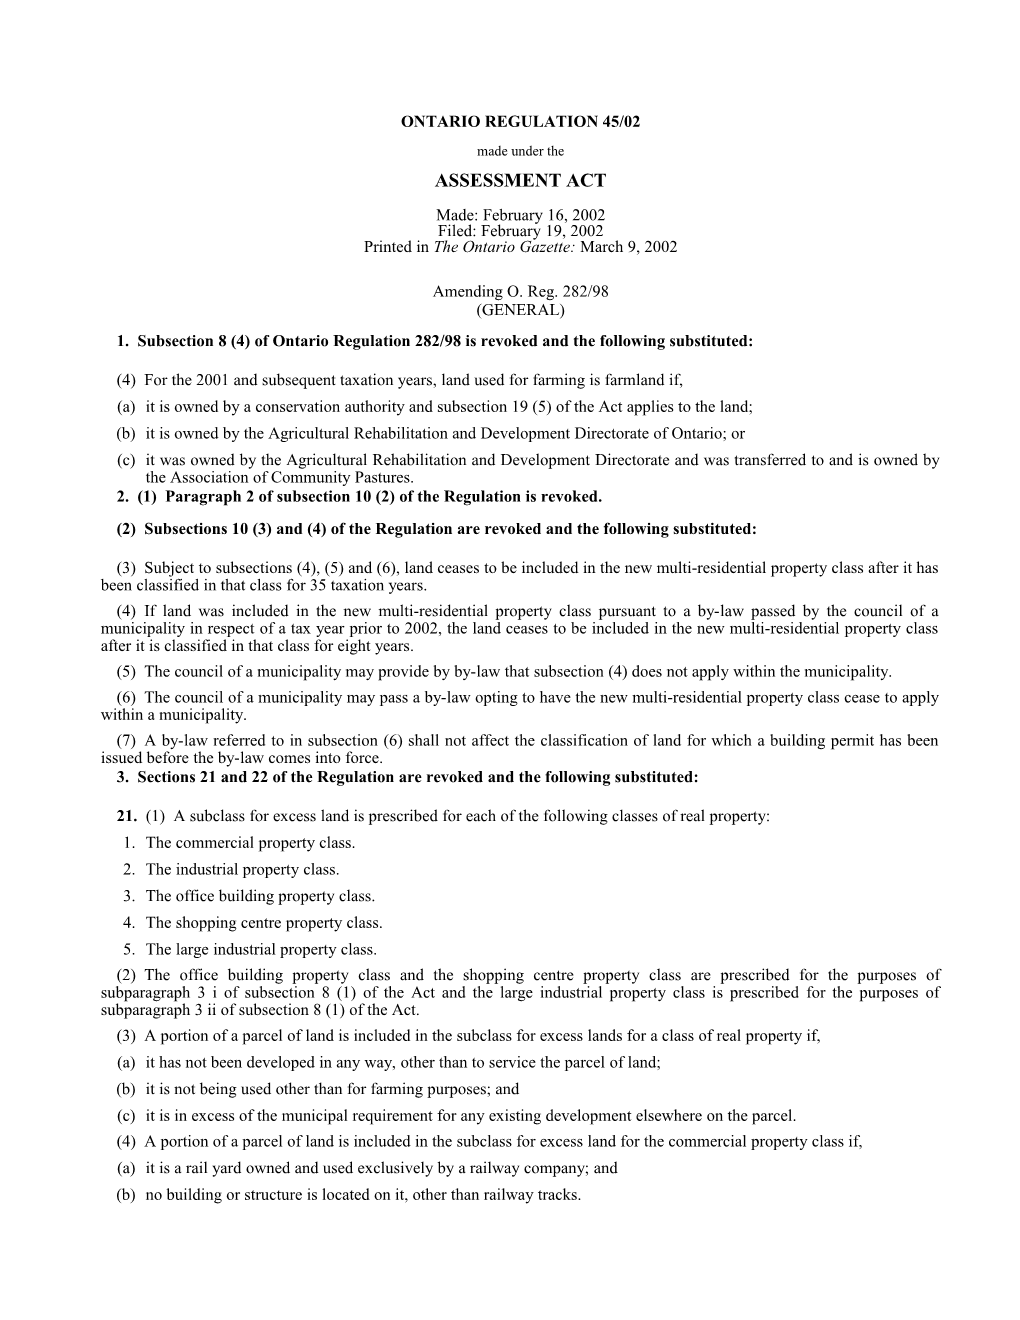 ASSESSMENT ACT - O. Reg. 45/02